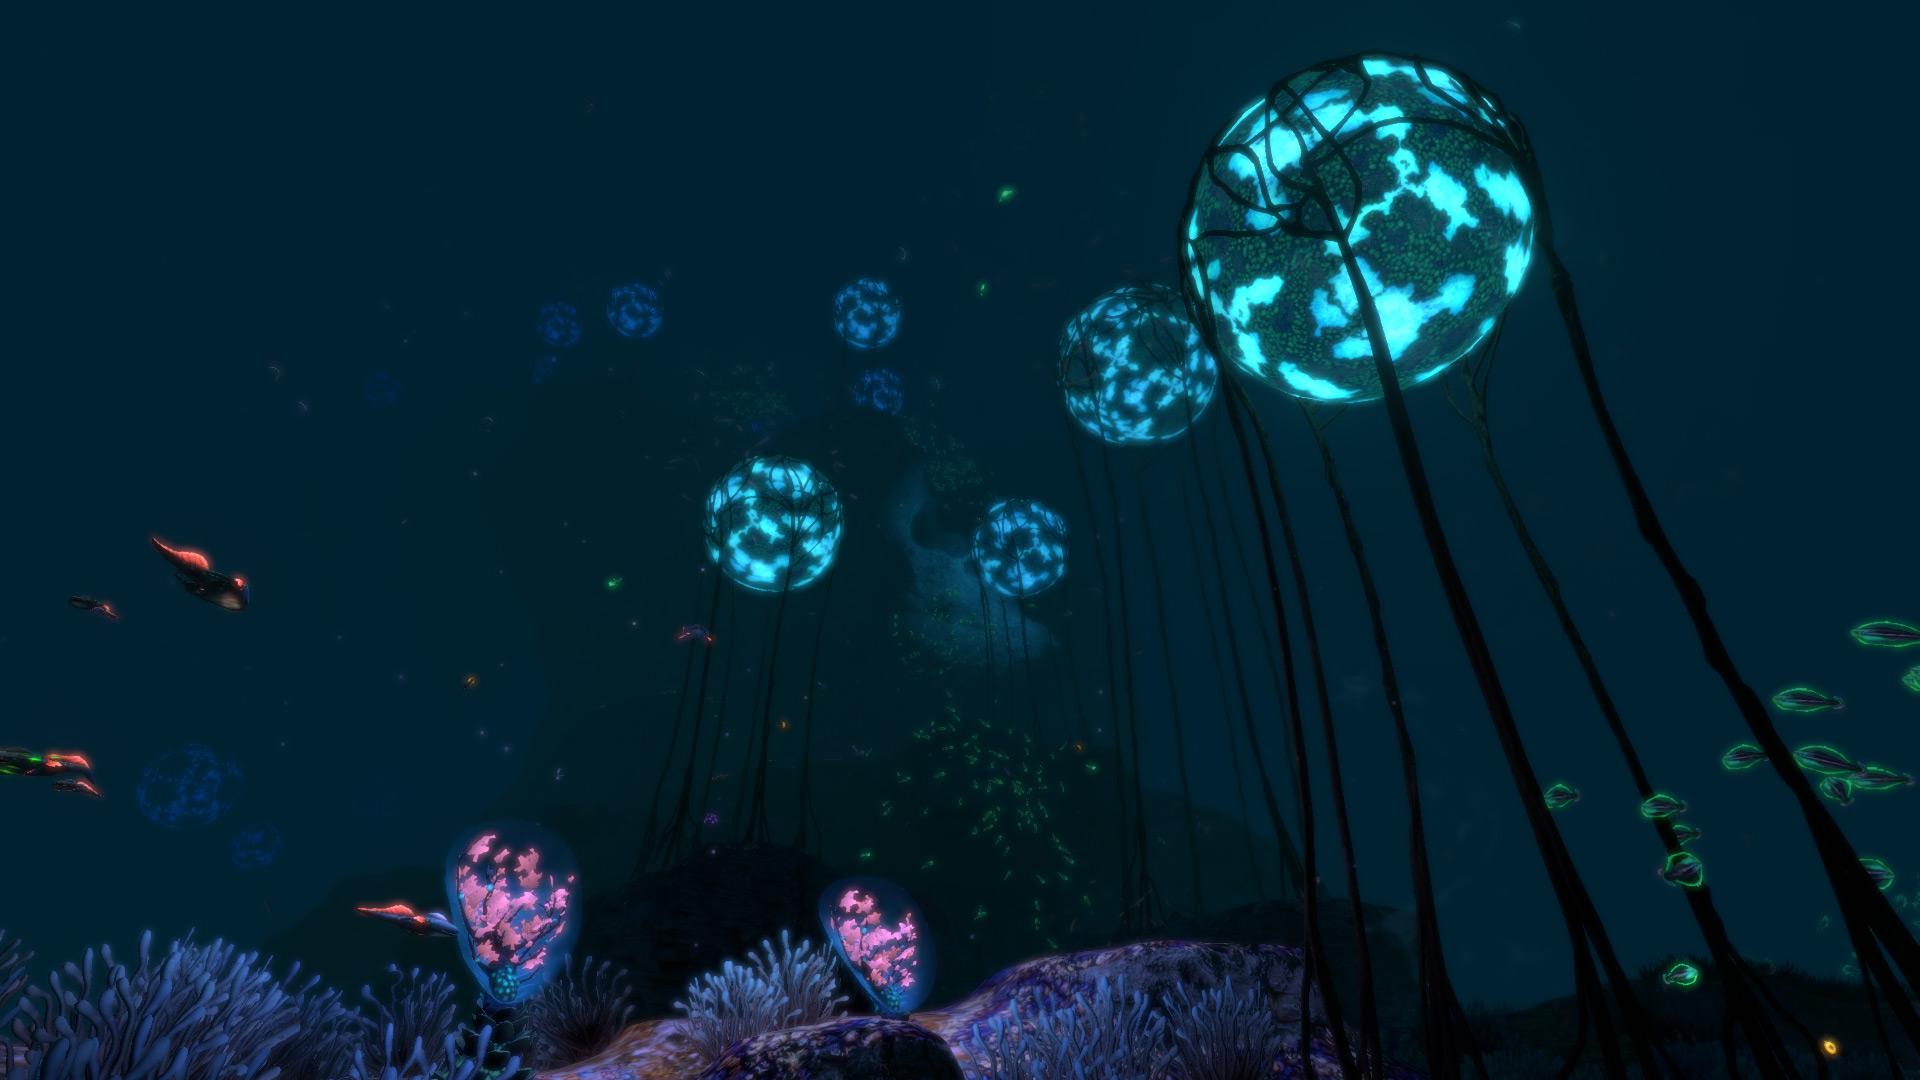 Subnautica - An Underwater Exploration Game